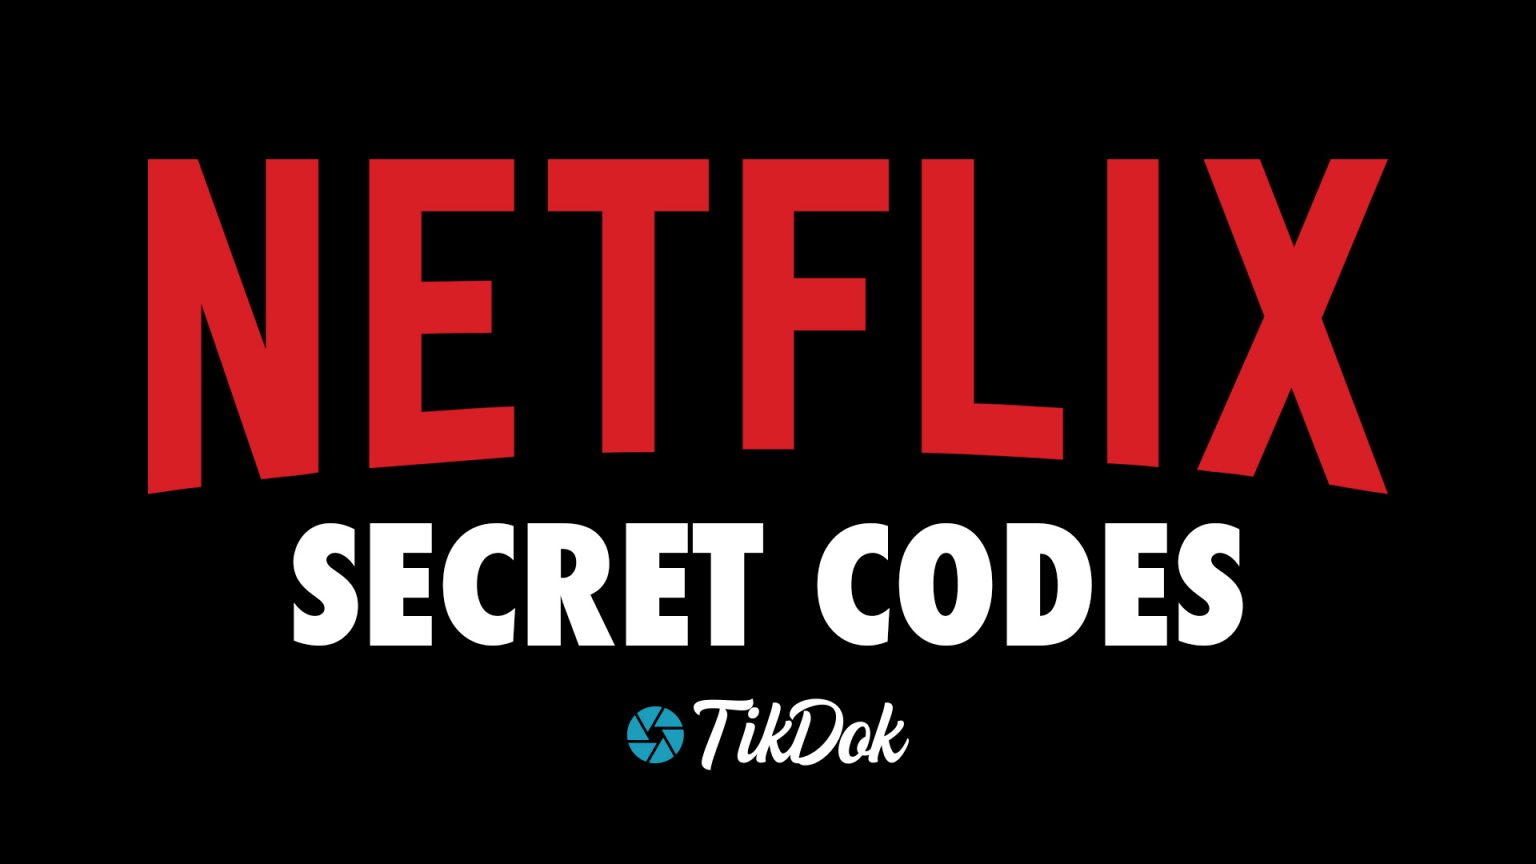 Netflix Secret Codes TikDok Short Documentaries For TikTok